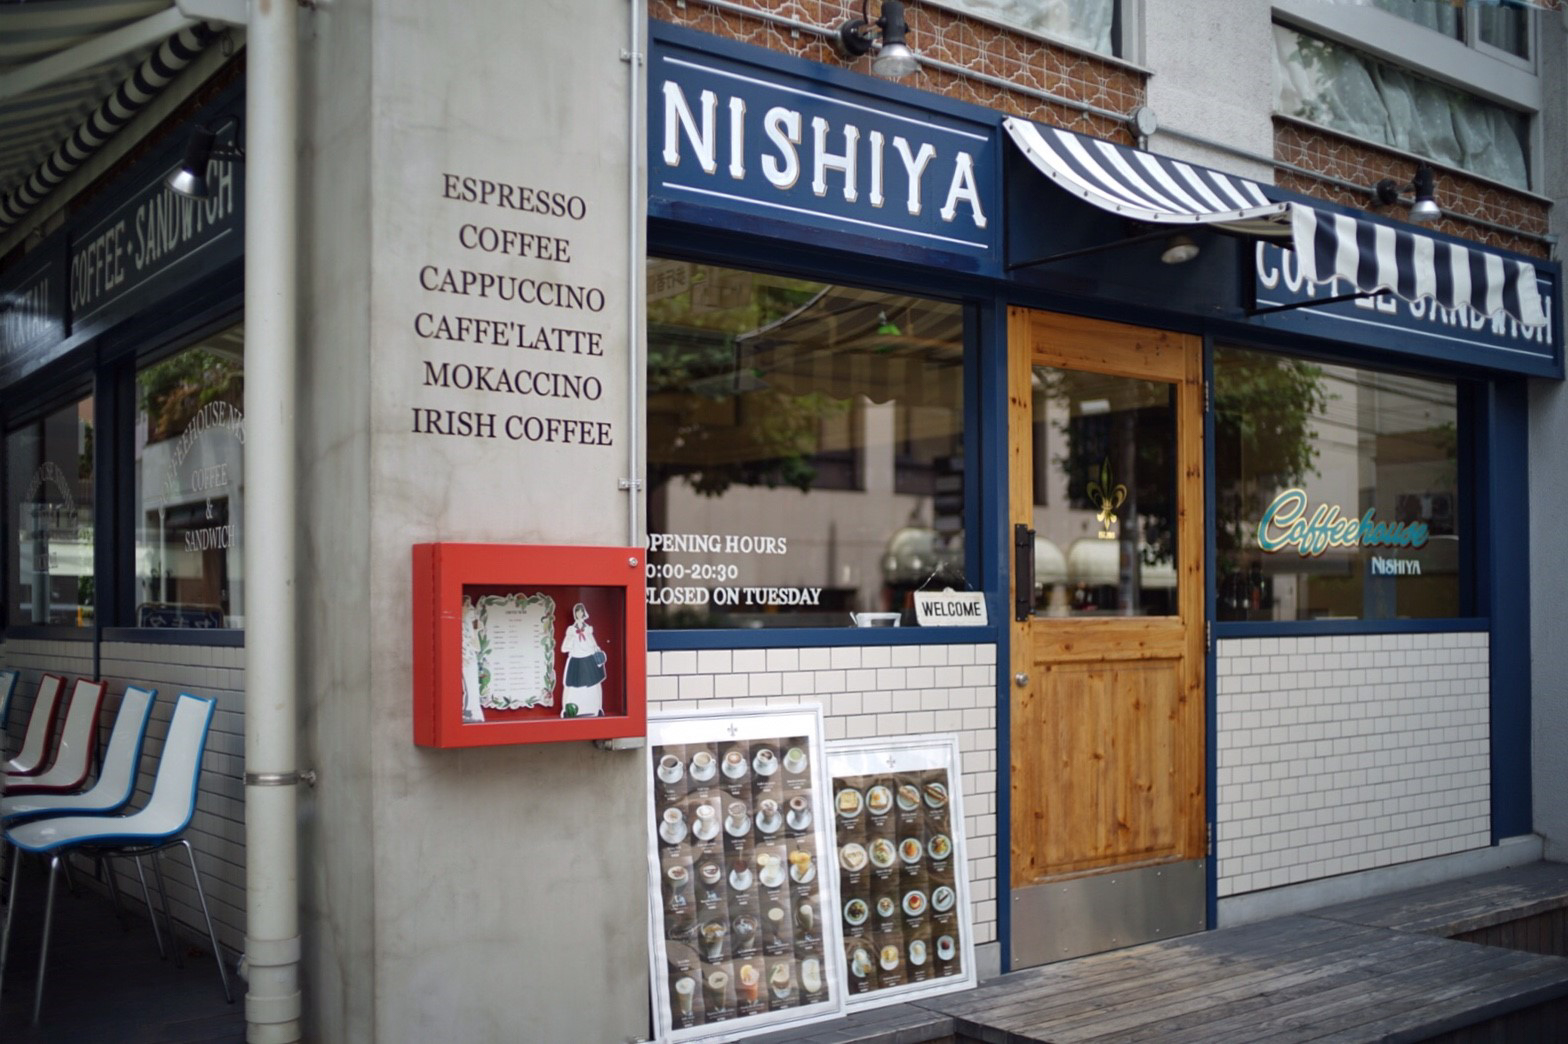 coffeehouse nishiya shibuya tokyo japan coffee cafe italian sprudge